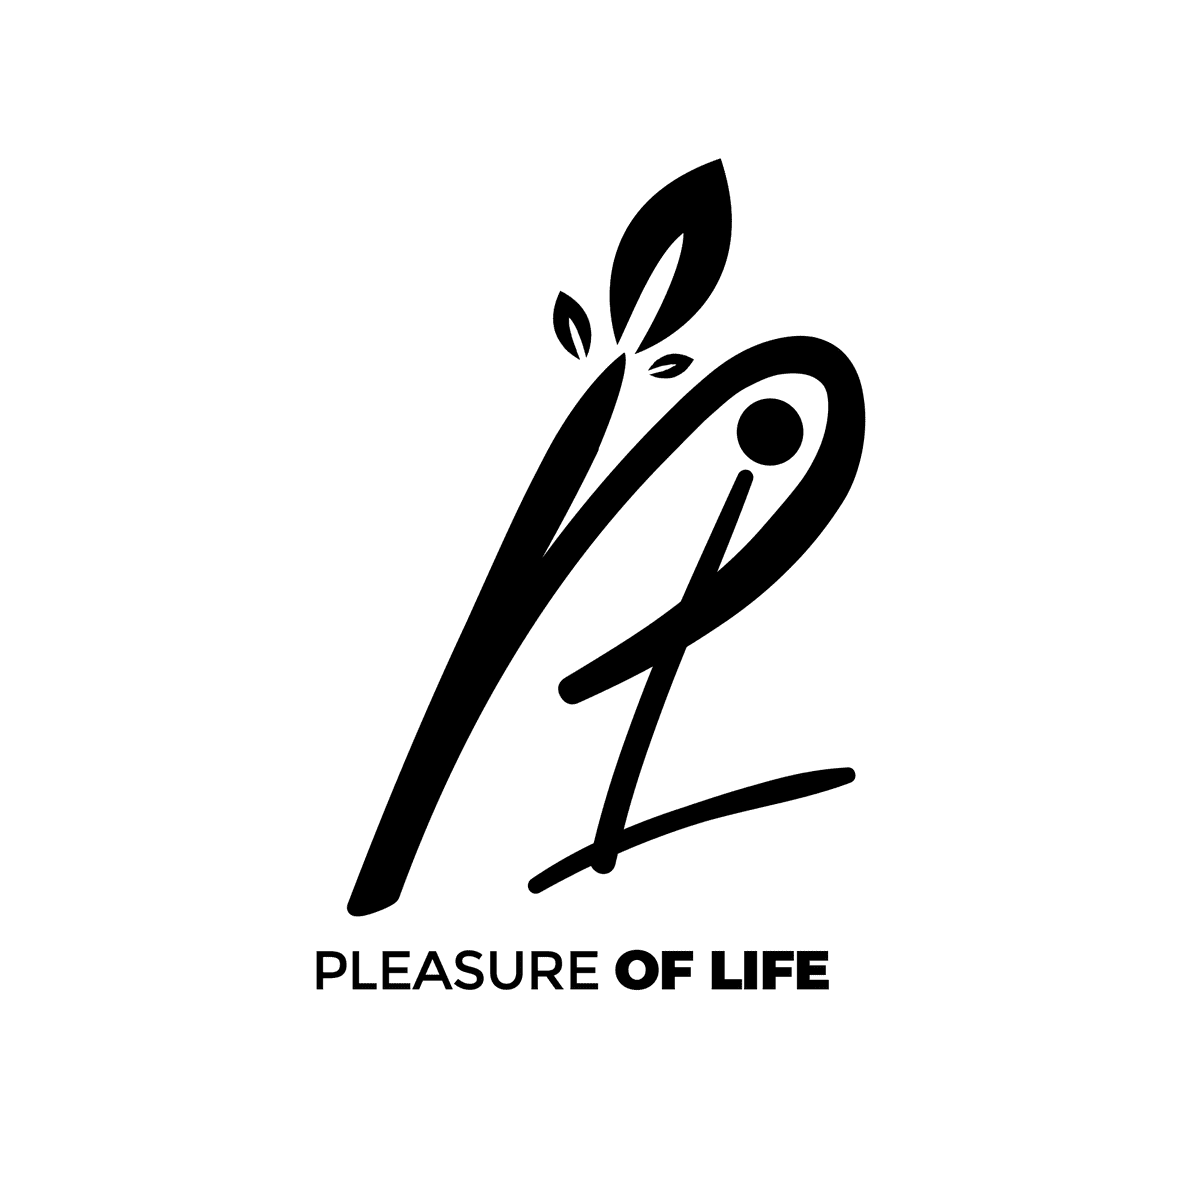 Pleasure_of_life_logo_black